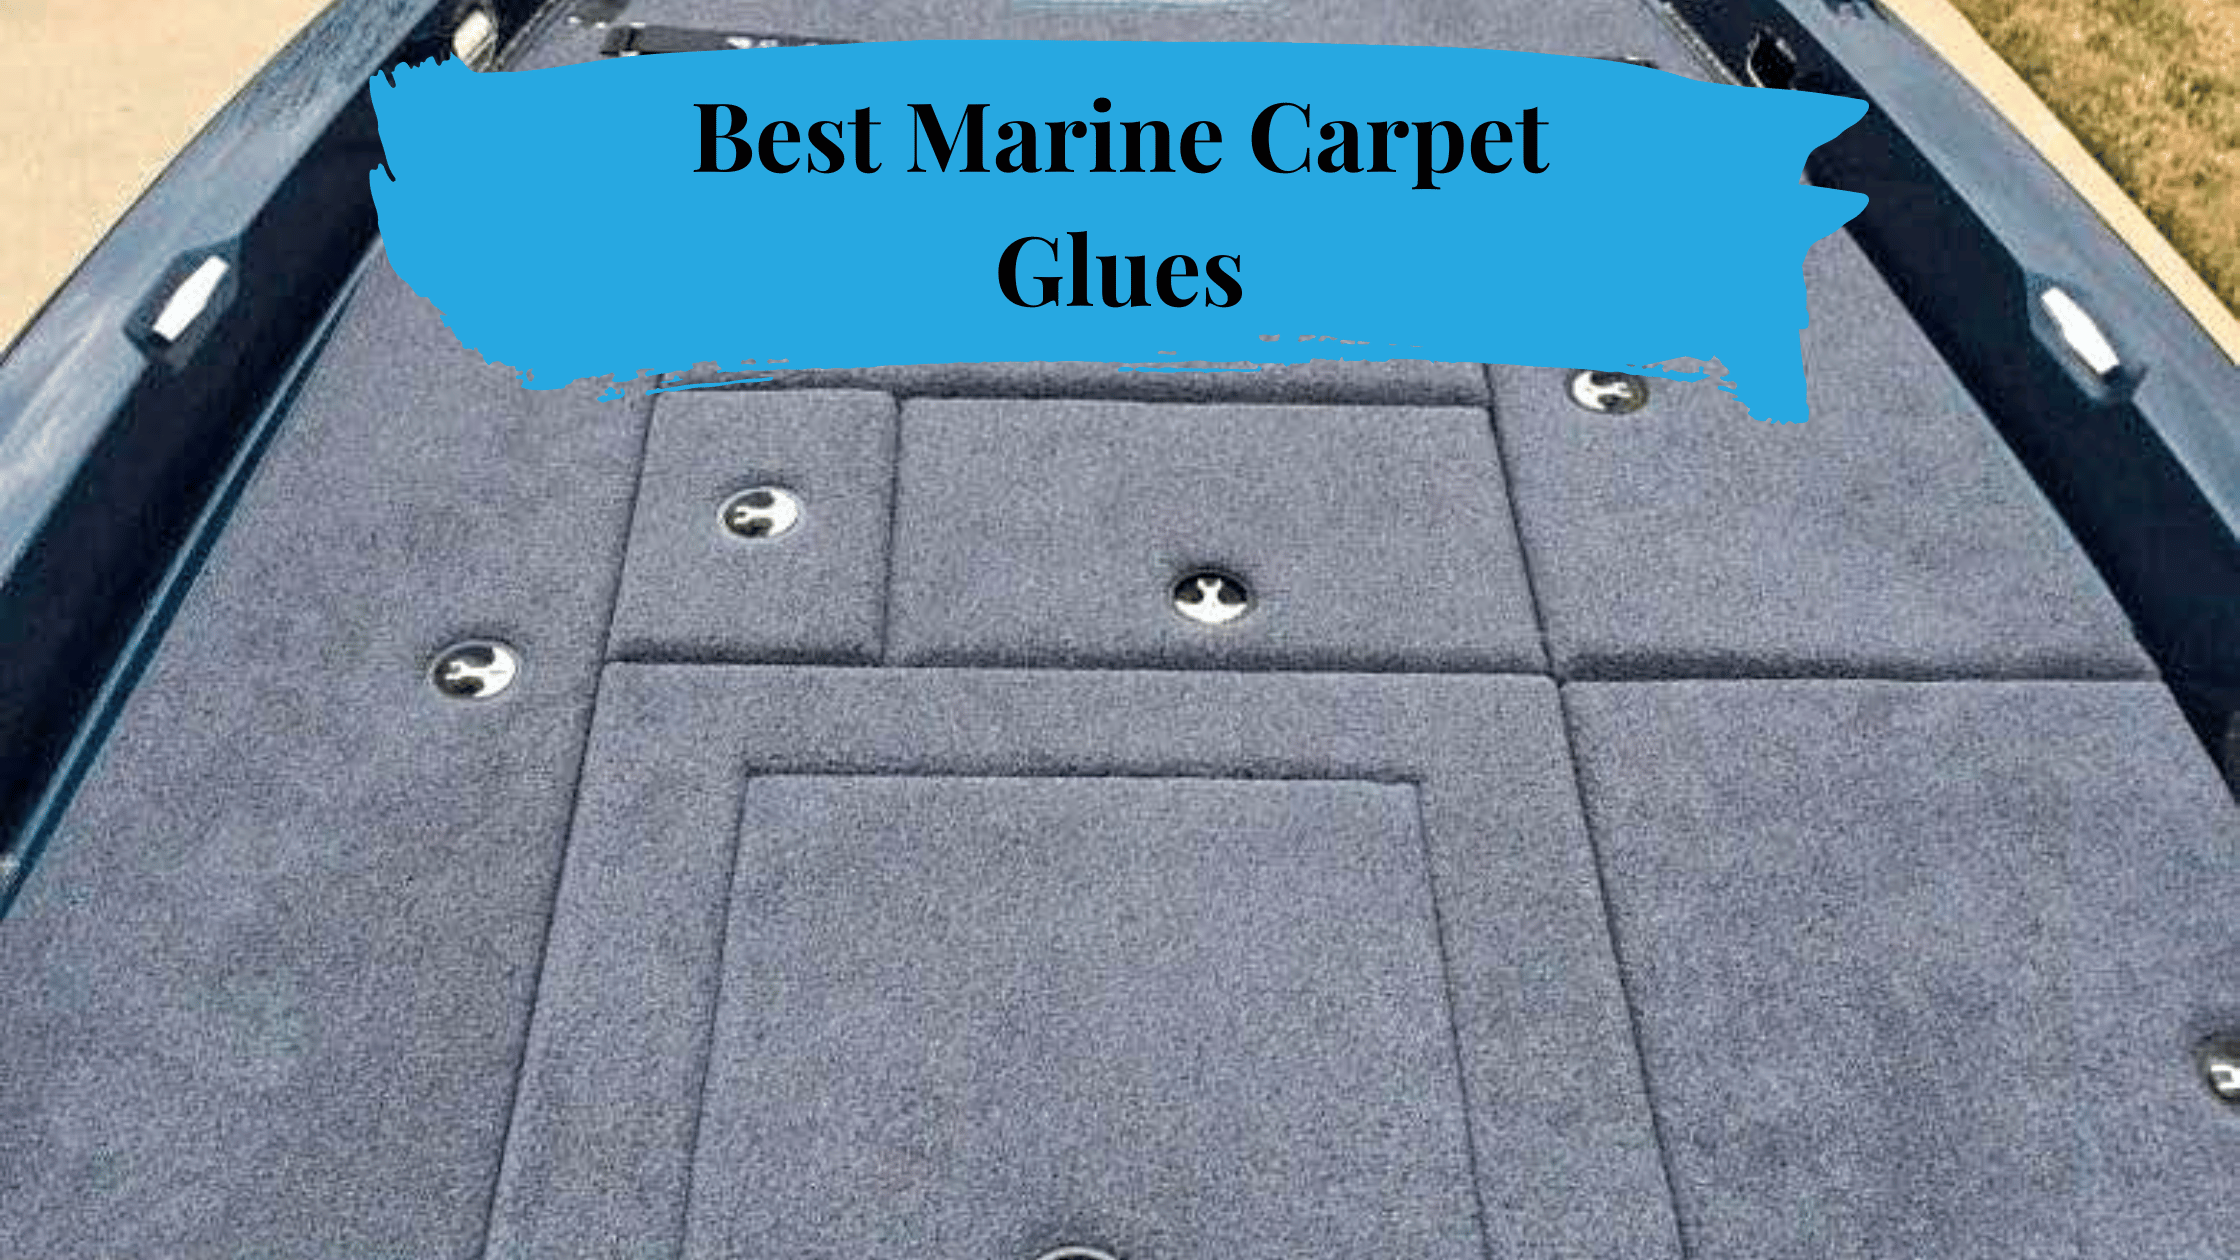 7 Best Marine Carpet Glues Top Choices